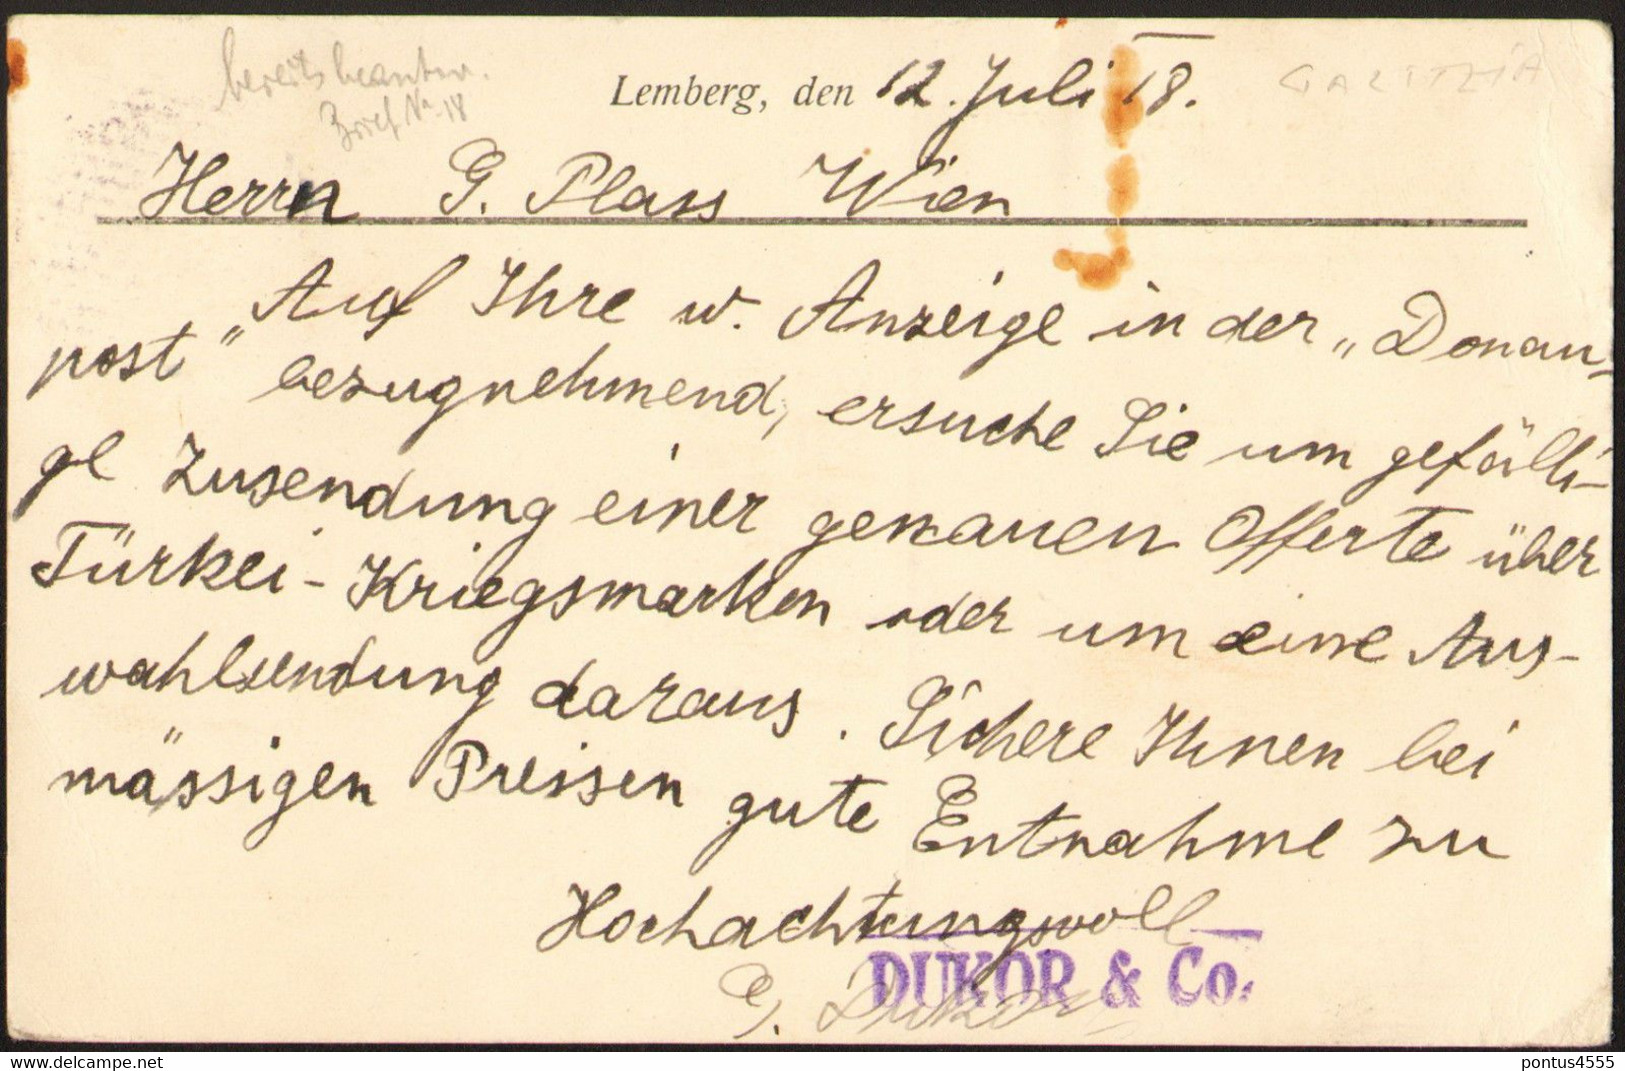 Poland Envelope 1918 Fi 20 (Mi188) Lemberg - Wiedeń - Storia Postale